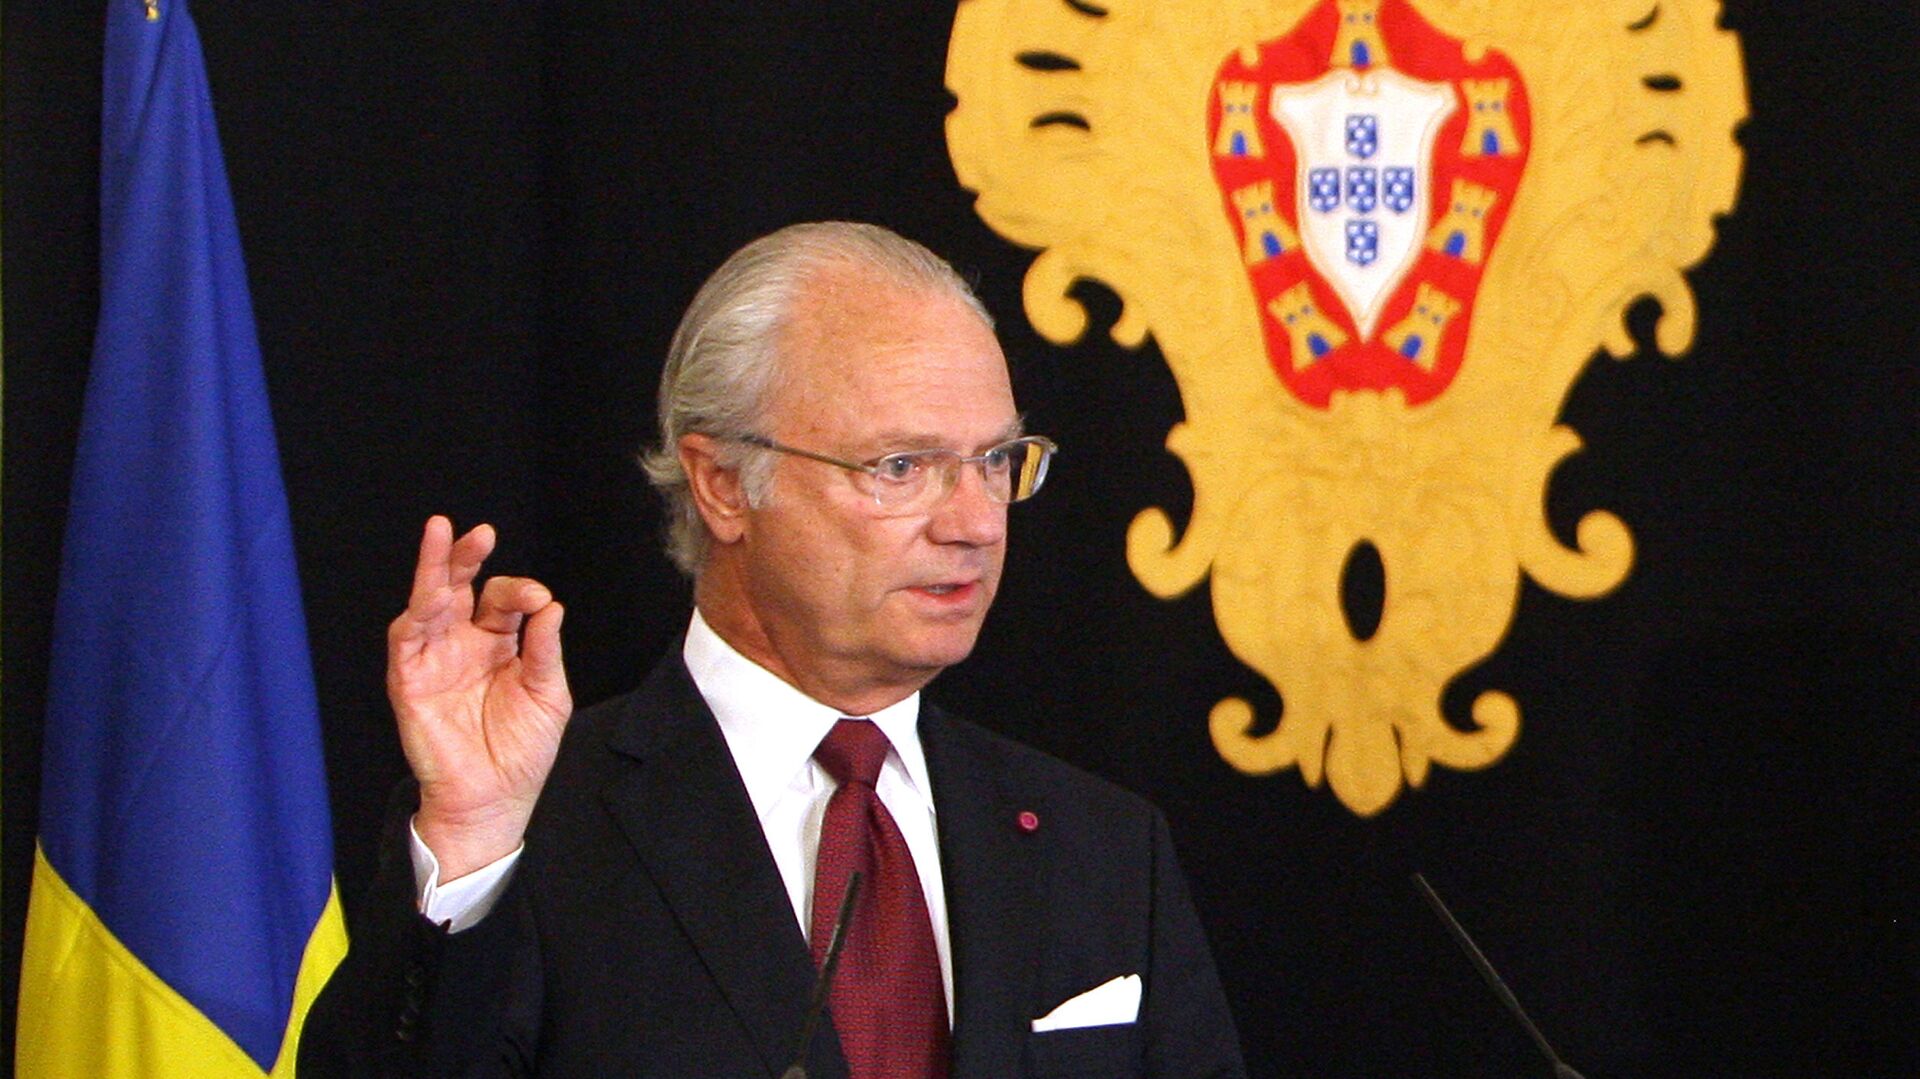 Raja Carl XVI Gustaf Swedia Kecam Undang-undang Anak Sulung Absolut 1980